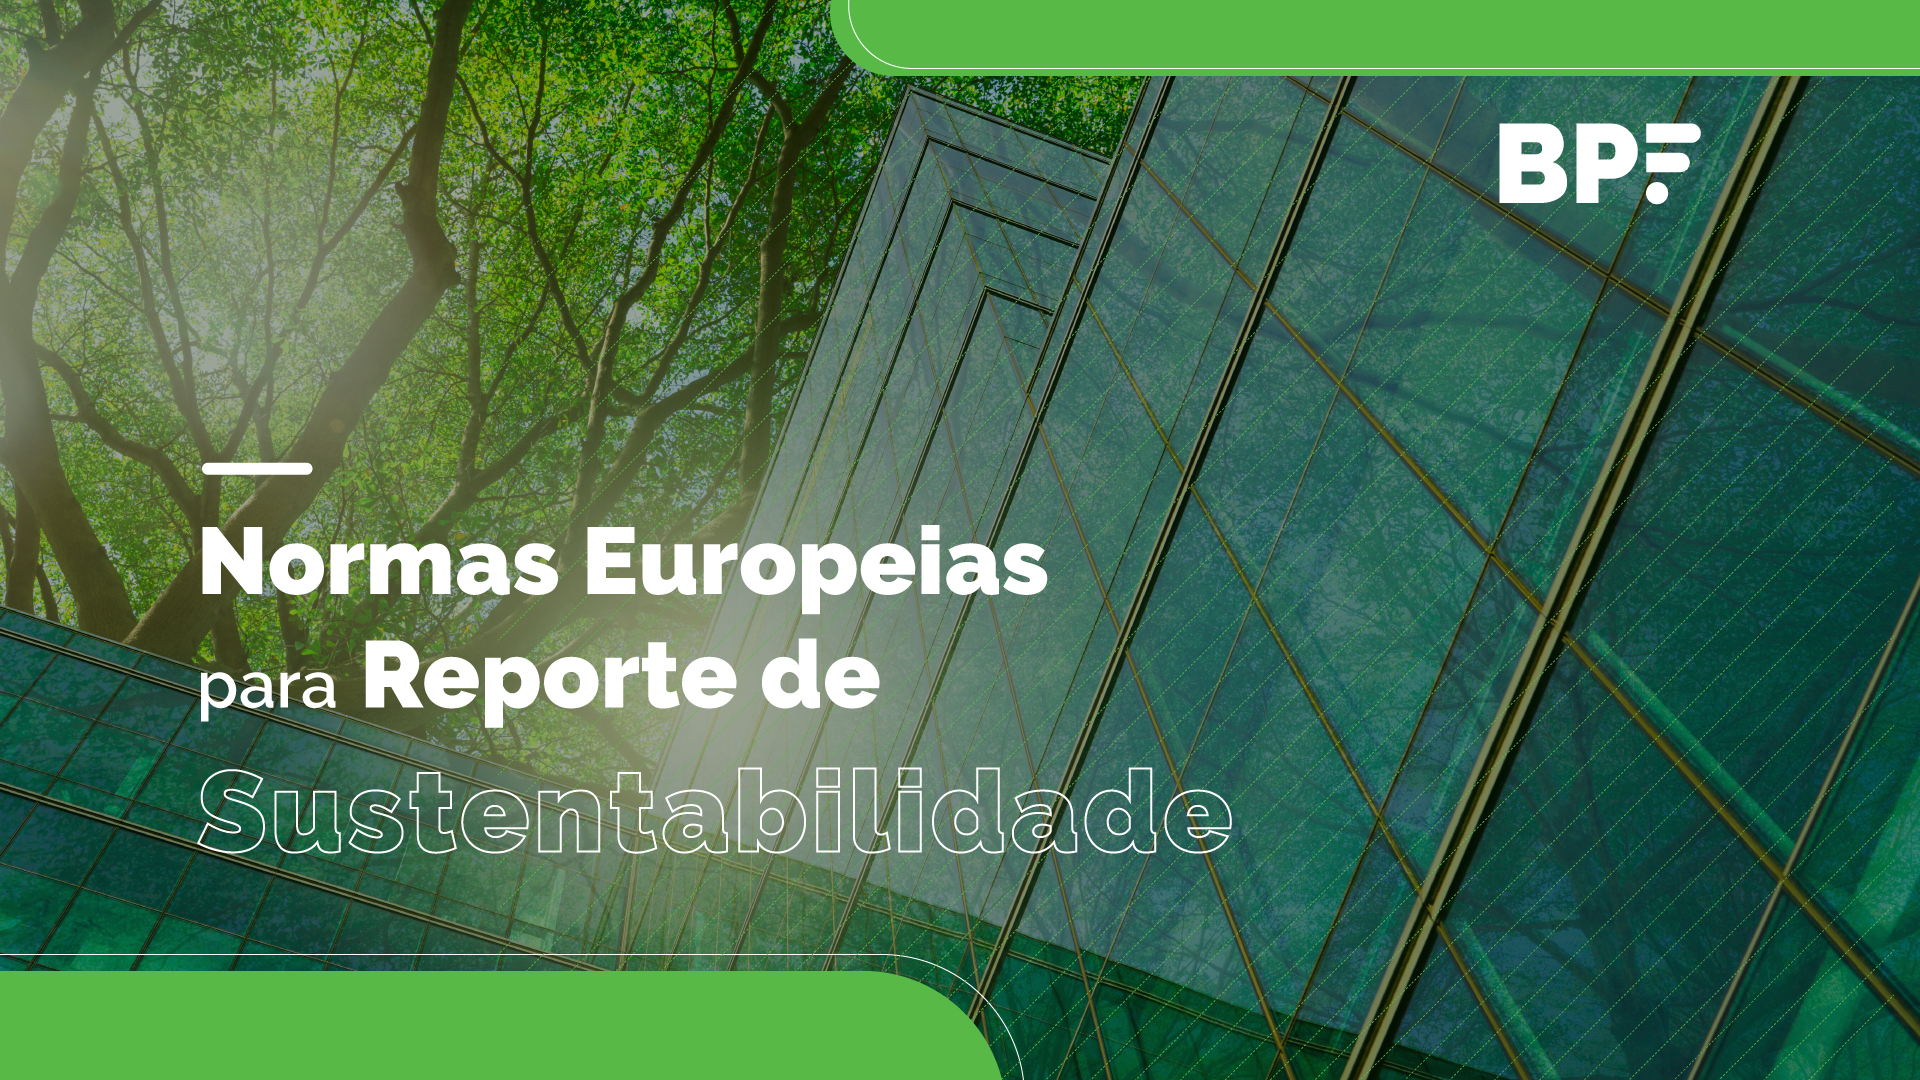 Normas Europeias para Reporte de Sustentabilidade